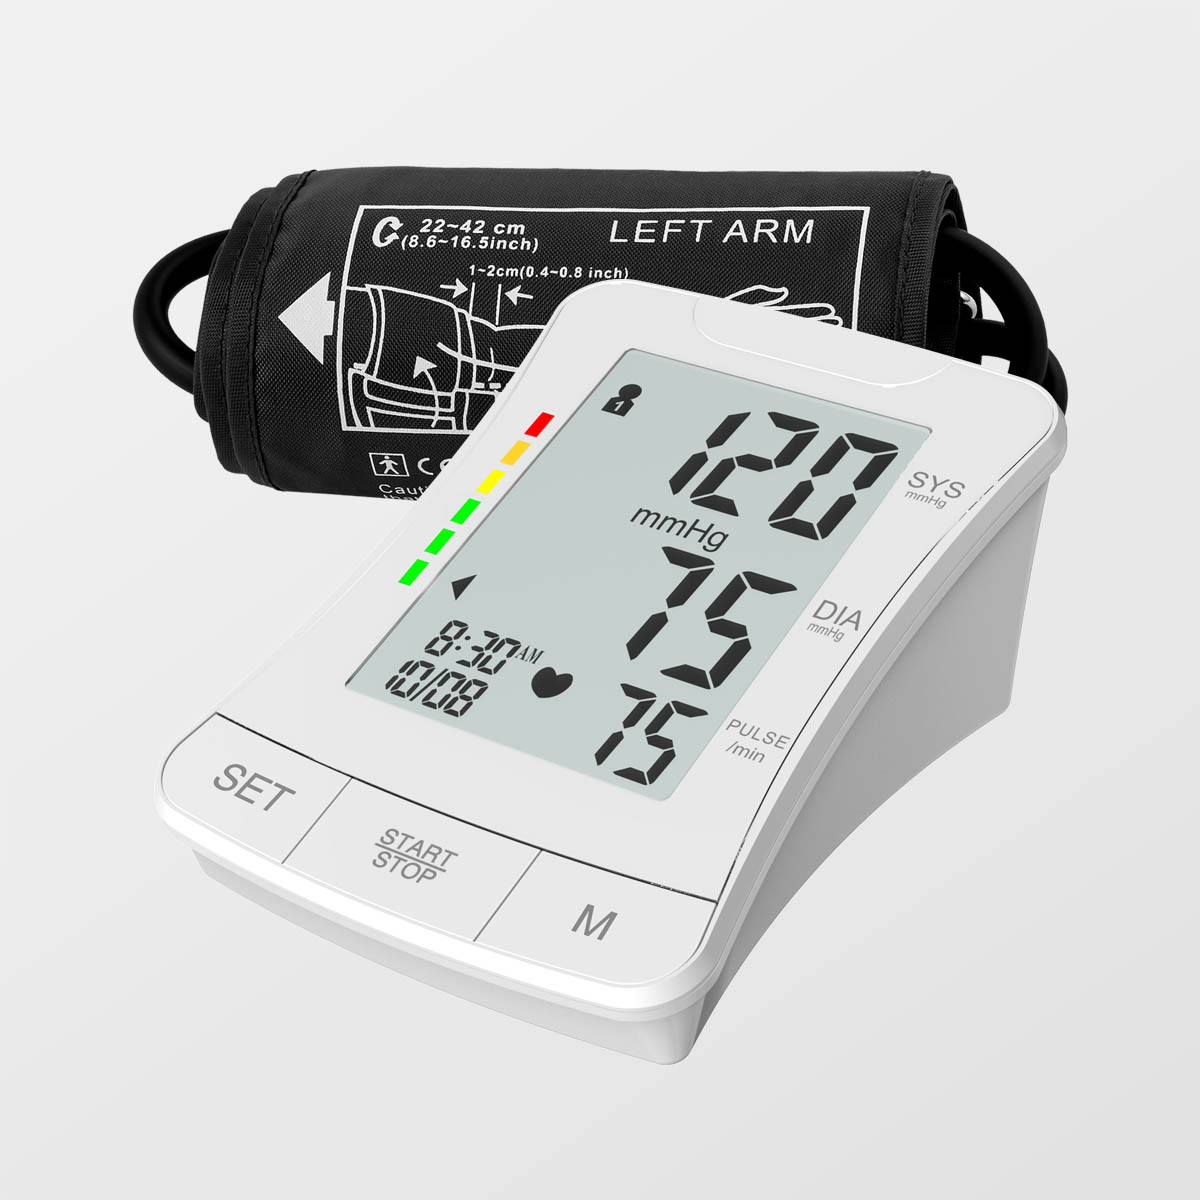 ESH Medical Thisen sang dik tak enfiahtu Bluetooth Digital Tensiometer